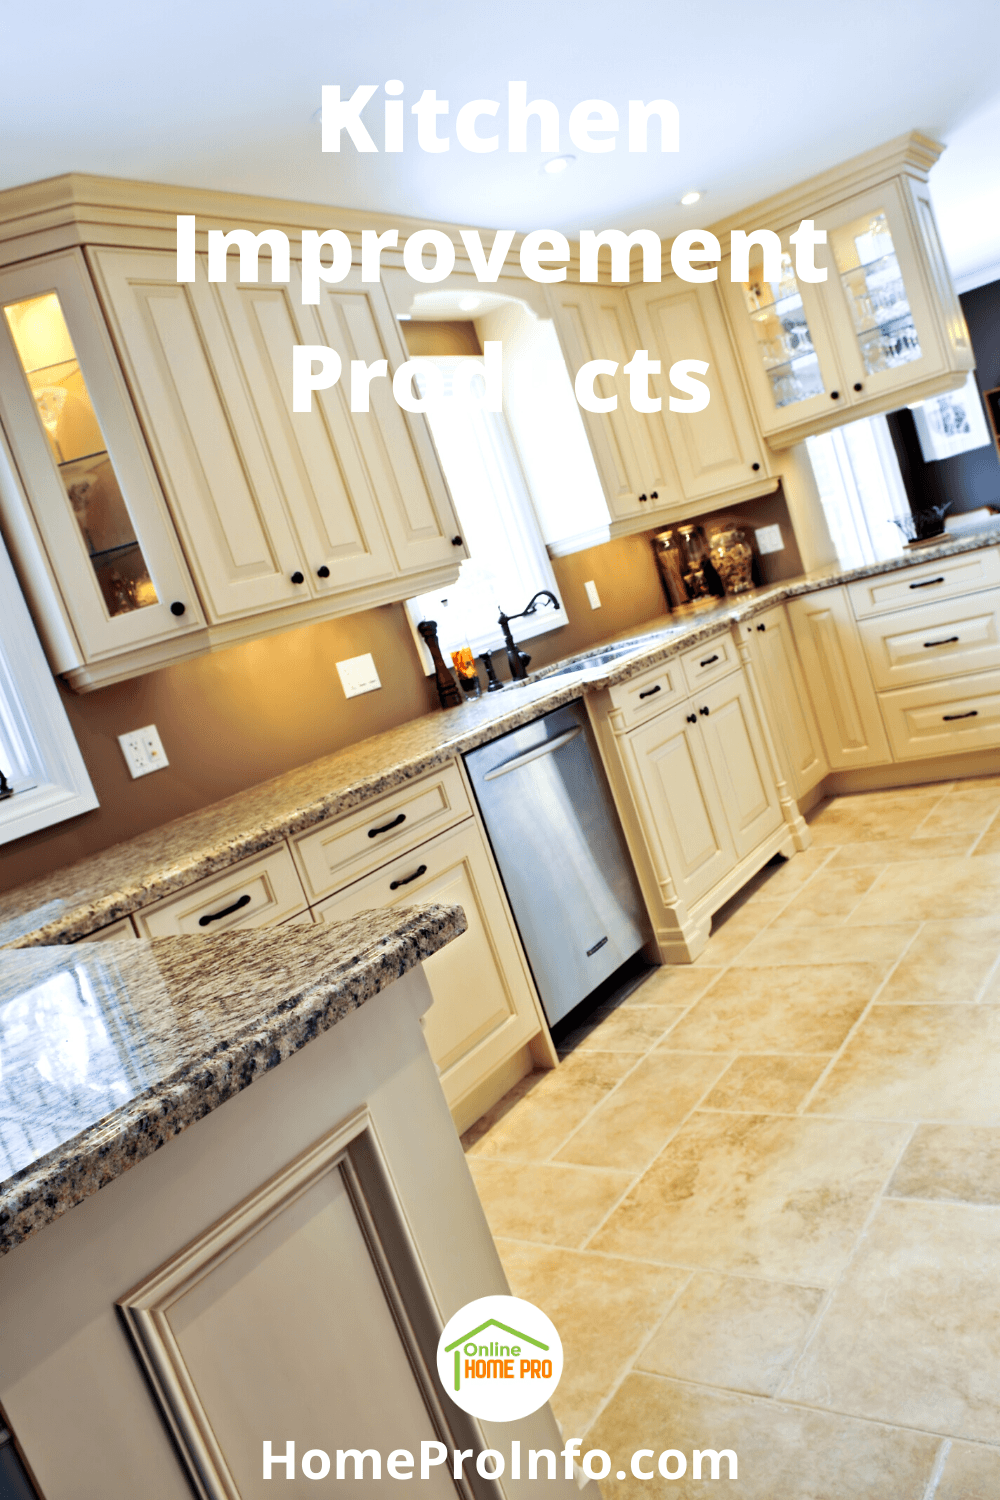 kitchen improvement products